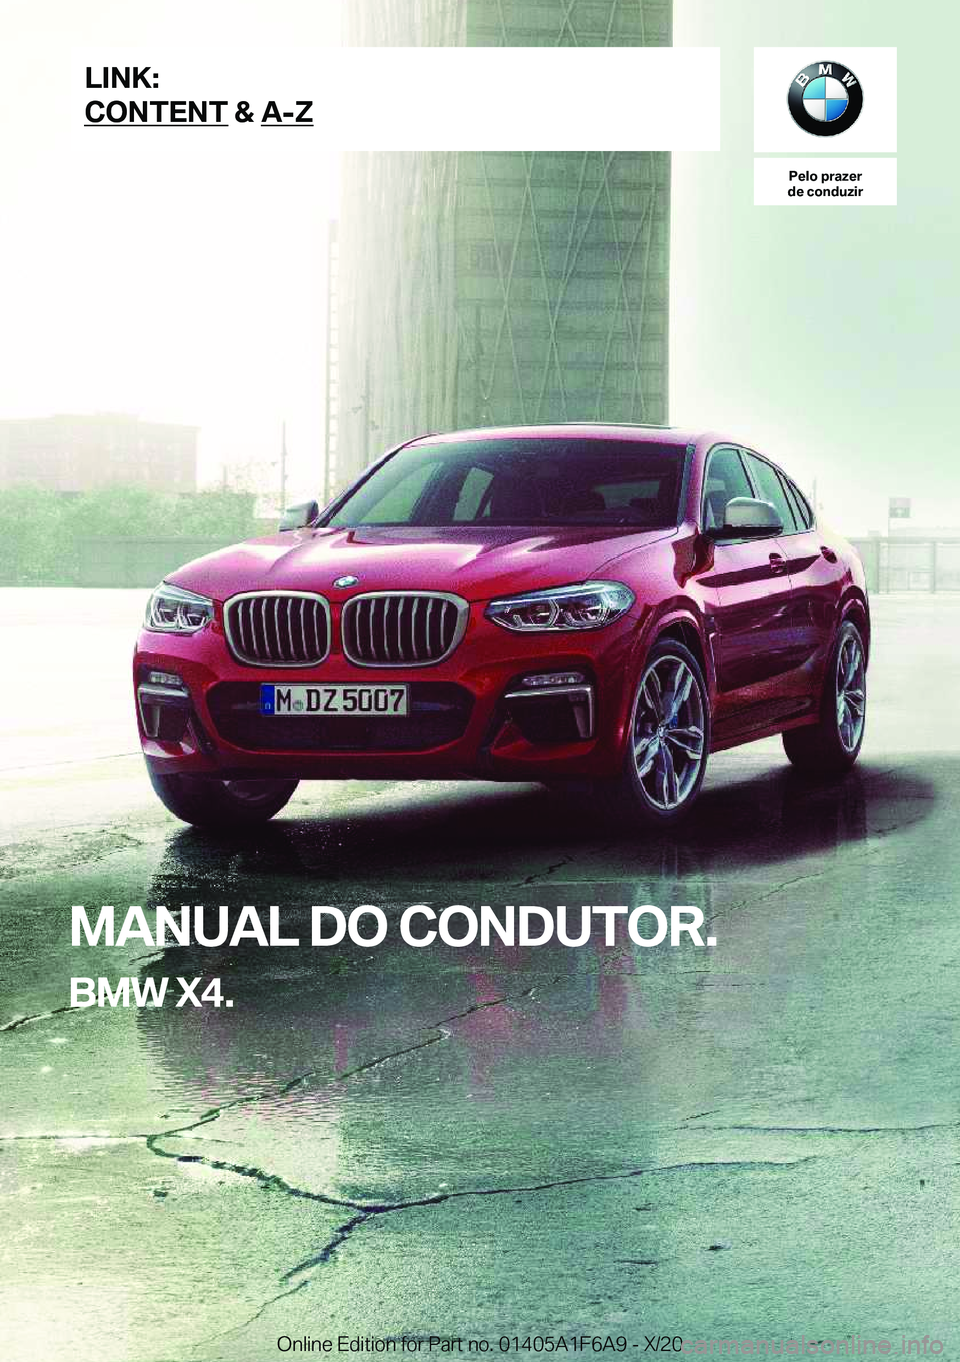 BMW X4 2021  Manual do condutor (in Portuguese) �P�e�l�o��p�r�a�z�e�r
�d�e��c�o�n�d�u�z�i�r
�M�A�N�U�A�L��D�O��C�O�N�D�U�T�O�R�.
�B�M�W��X�4�.�L�I�N�K�:
�C�O�N�T�E�N�T��&��A�-�Z�O�n�l�i�n�e��E�d�i�t�i�o�n��f�o�r��P�a�r�t��n�o�.��0�1�4�0